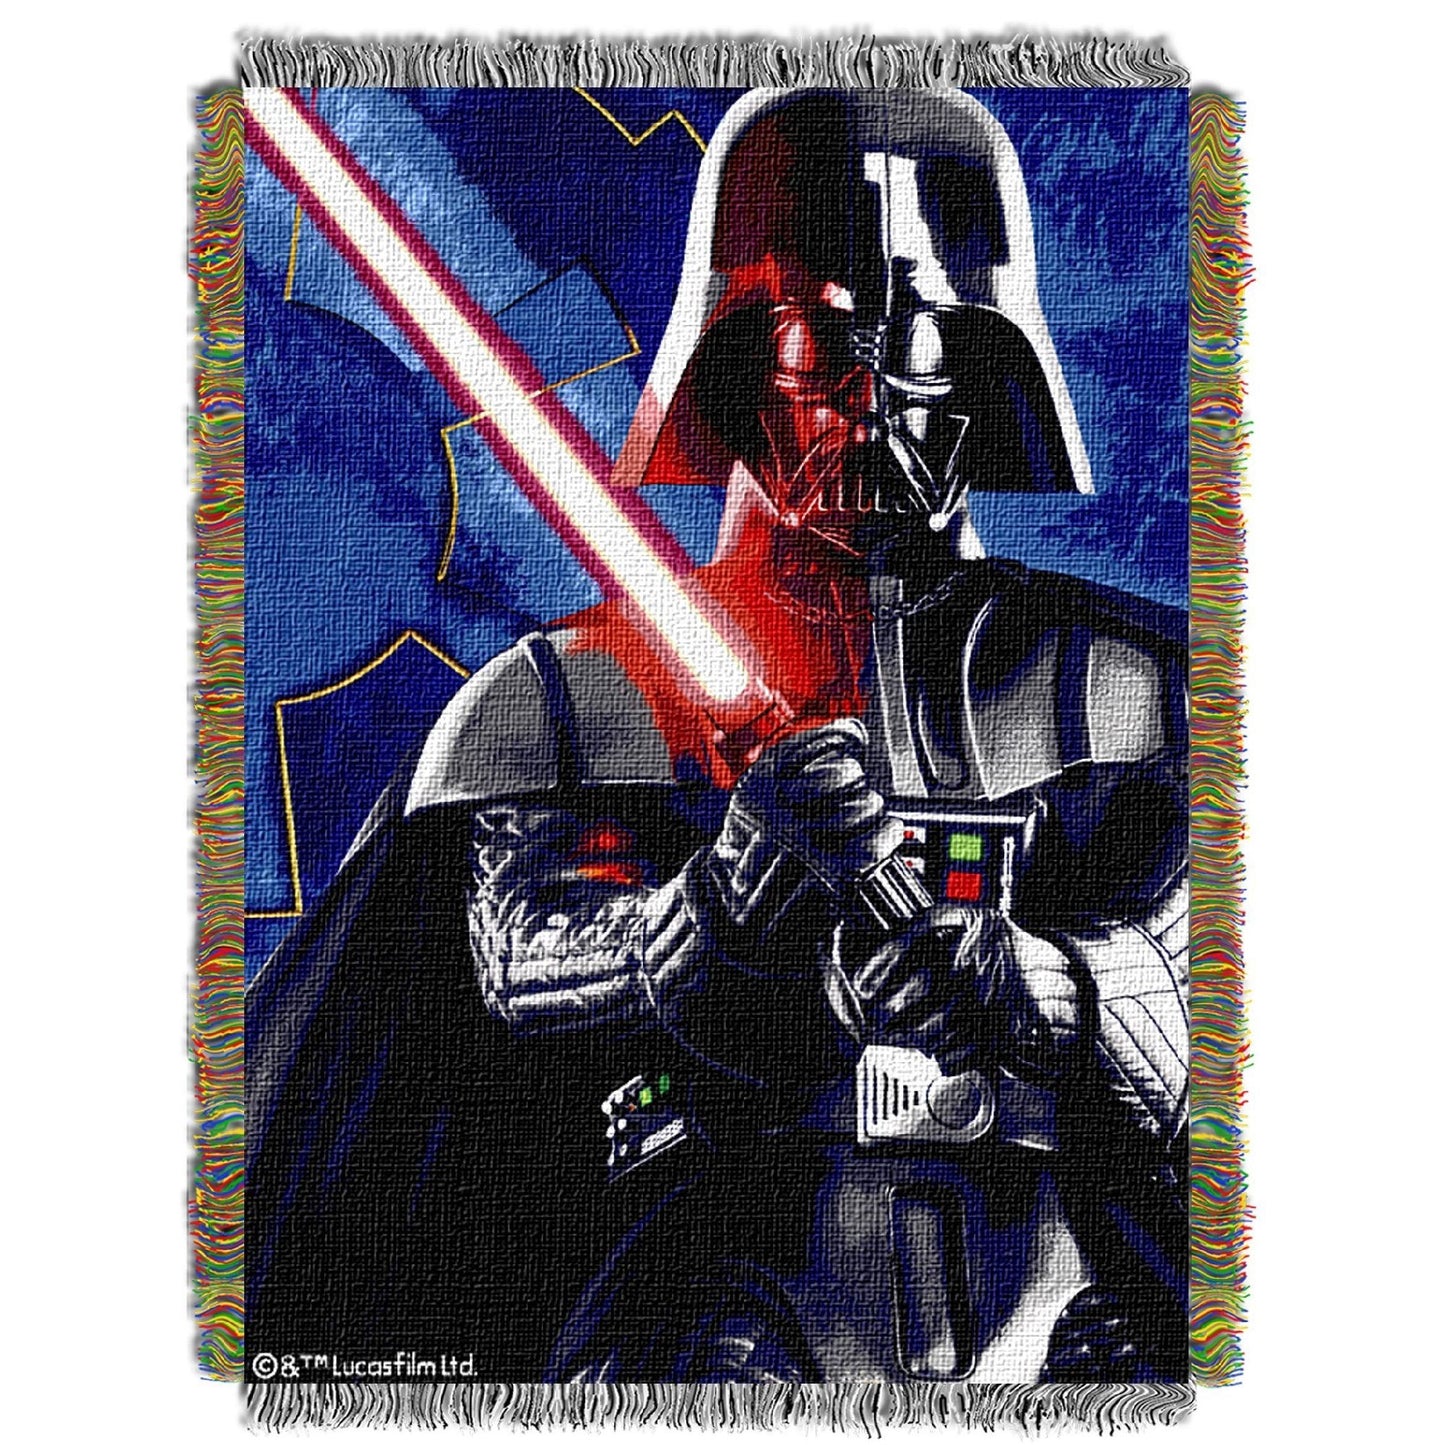 Star Wars Darth Vader "Sith Lord" Licensed 48"x 60" Blanket Throw